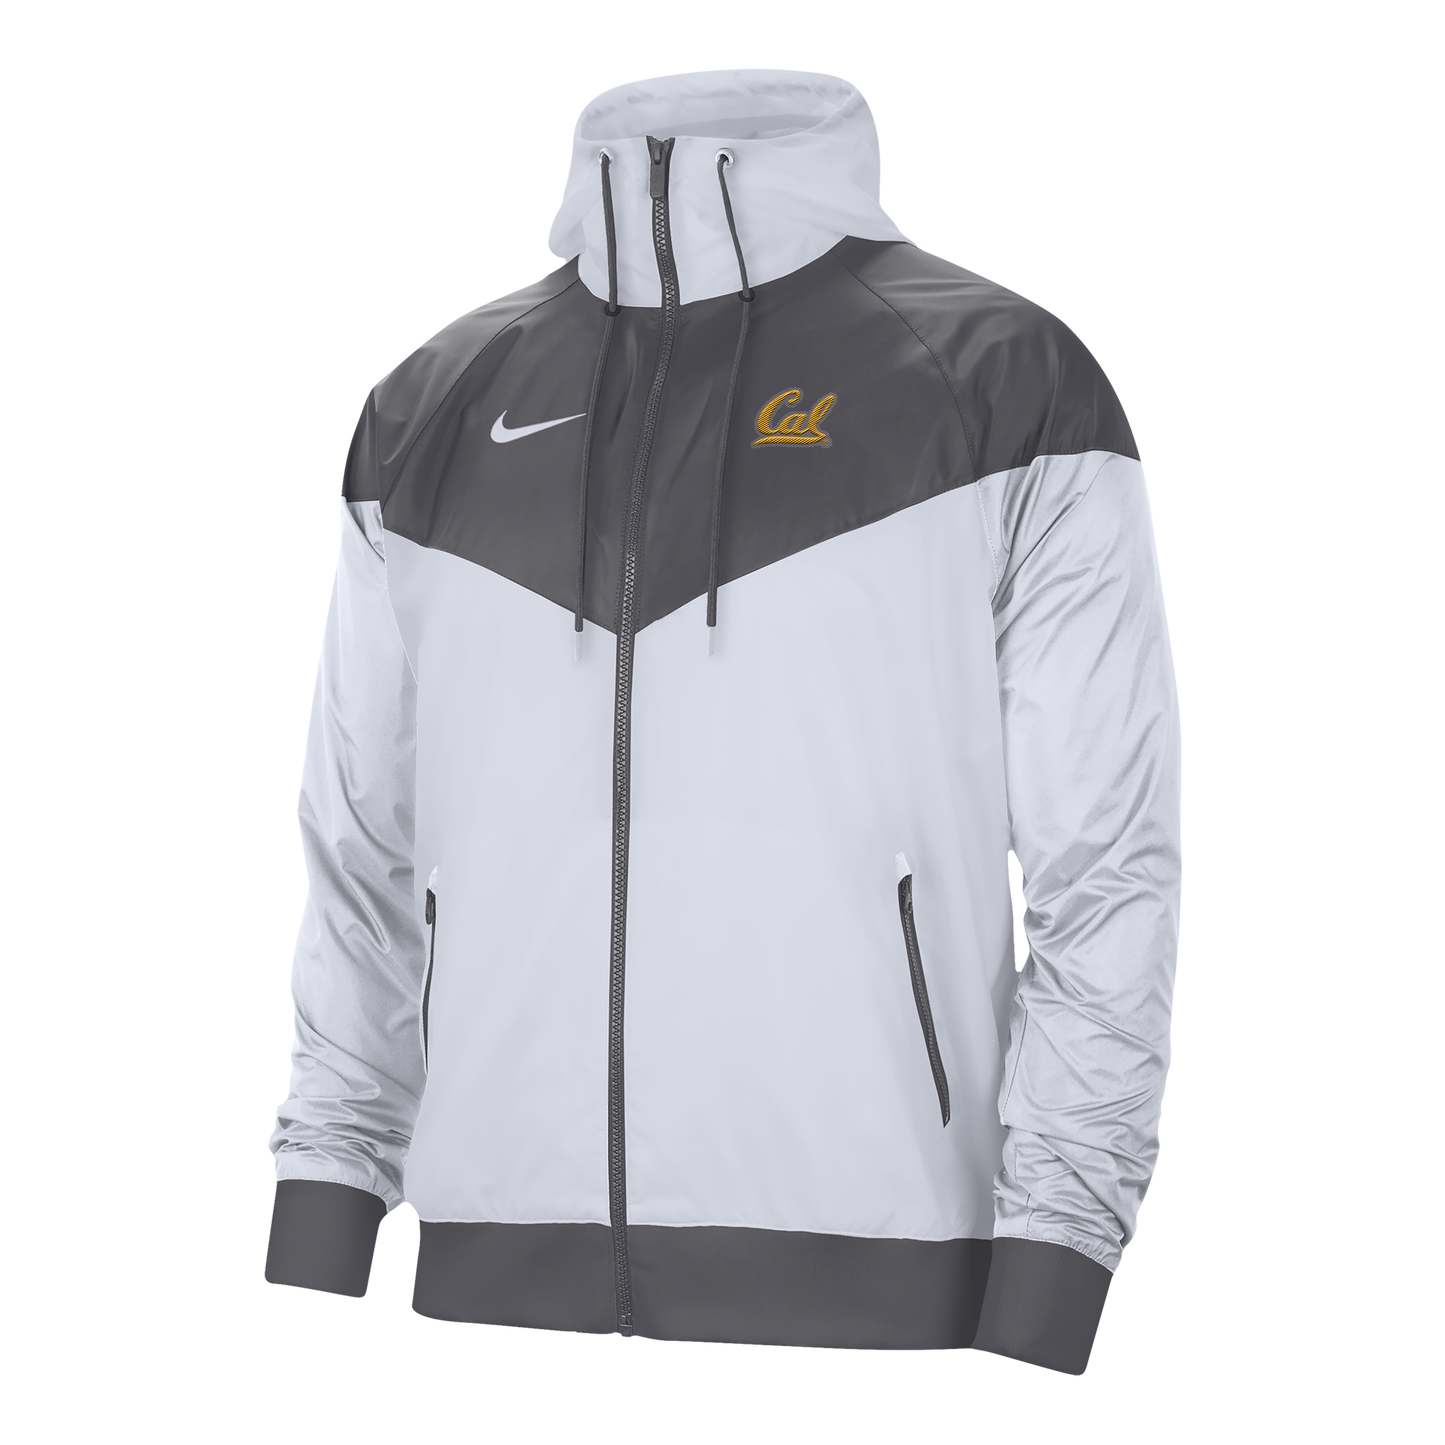 U.C. Berkeley Cal embroidered Nike Windrunner jacket-White-Shop College Wear